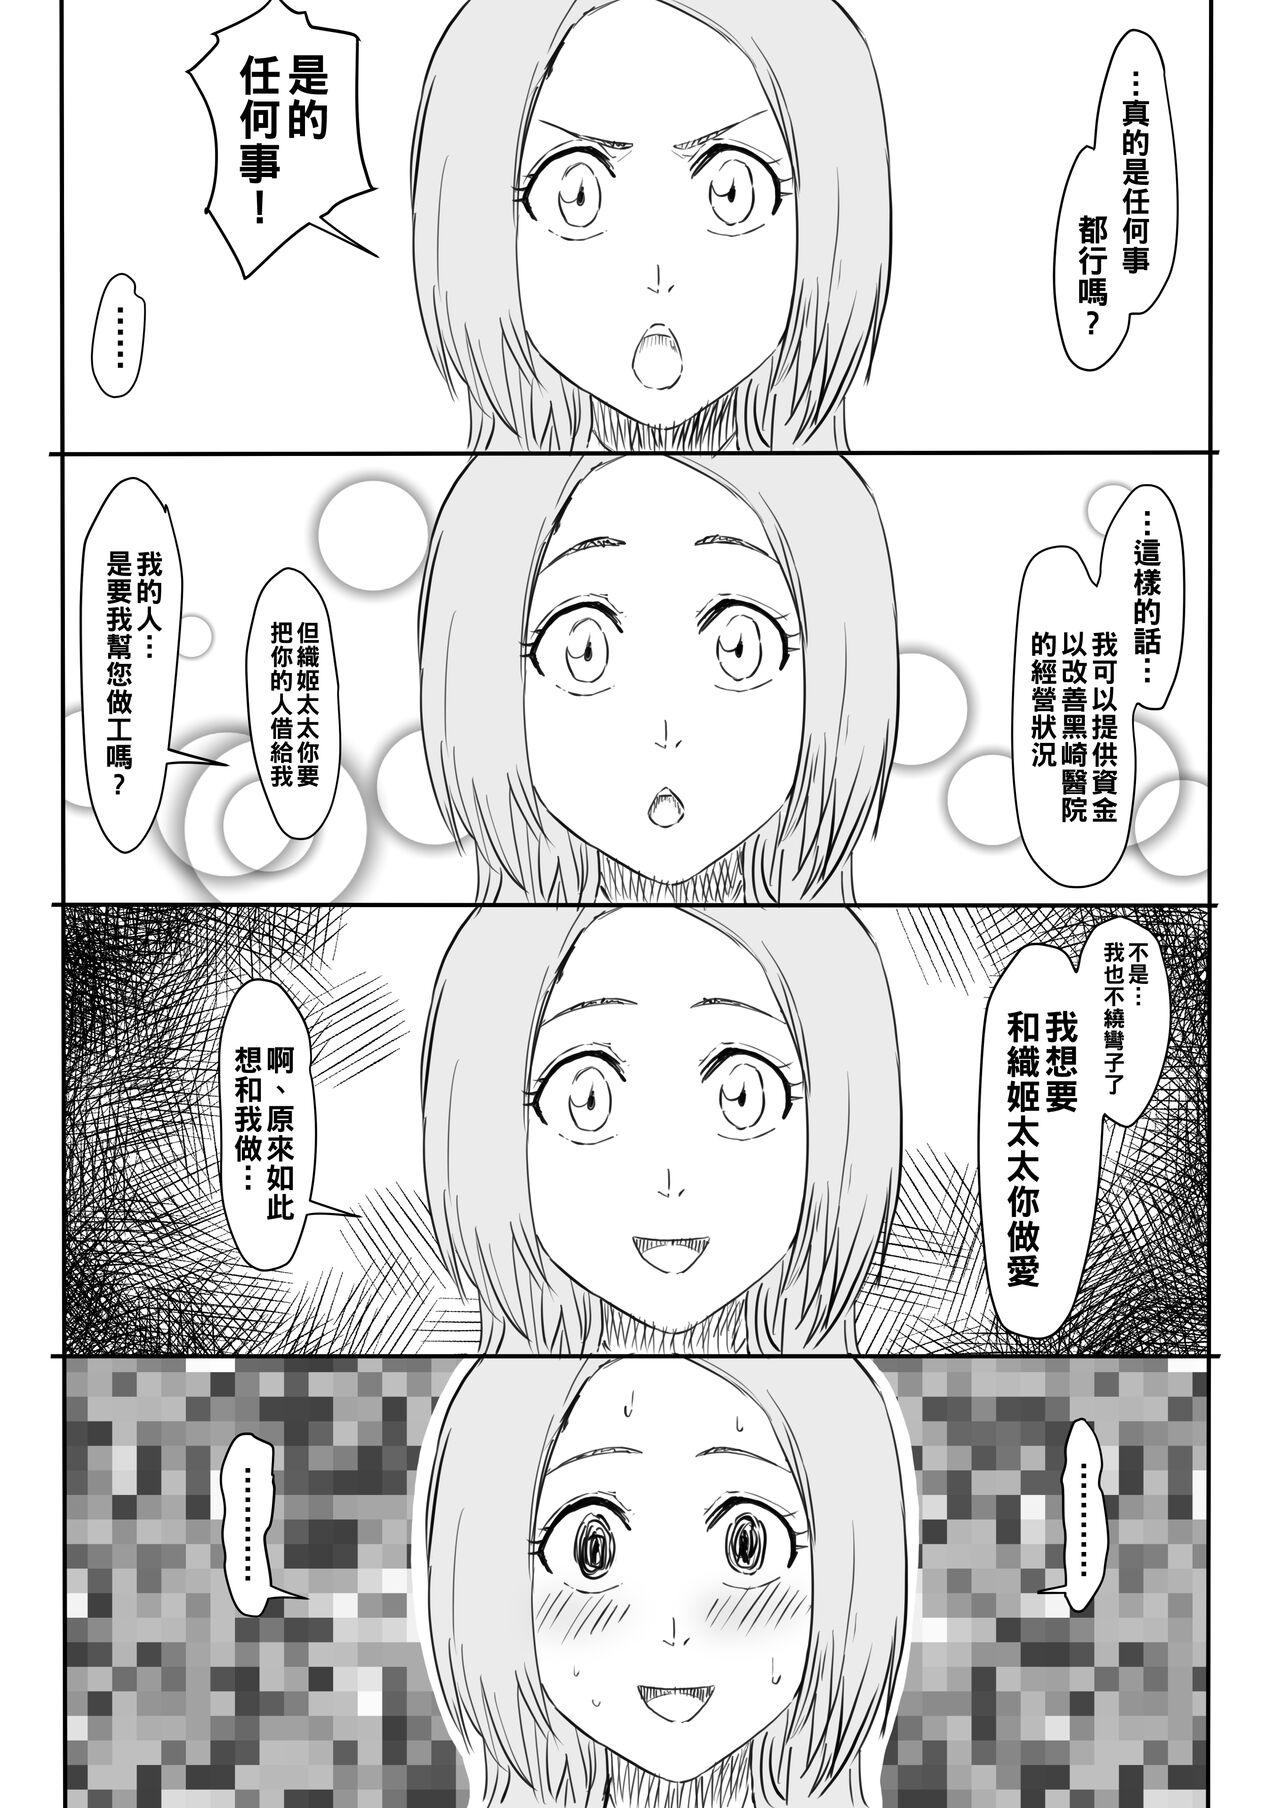 Blowjob Orihime Manga - Bleach Alt - Page 3